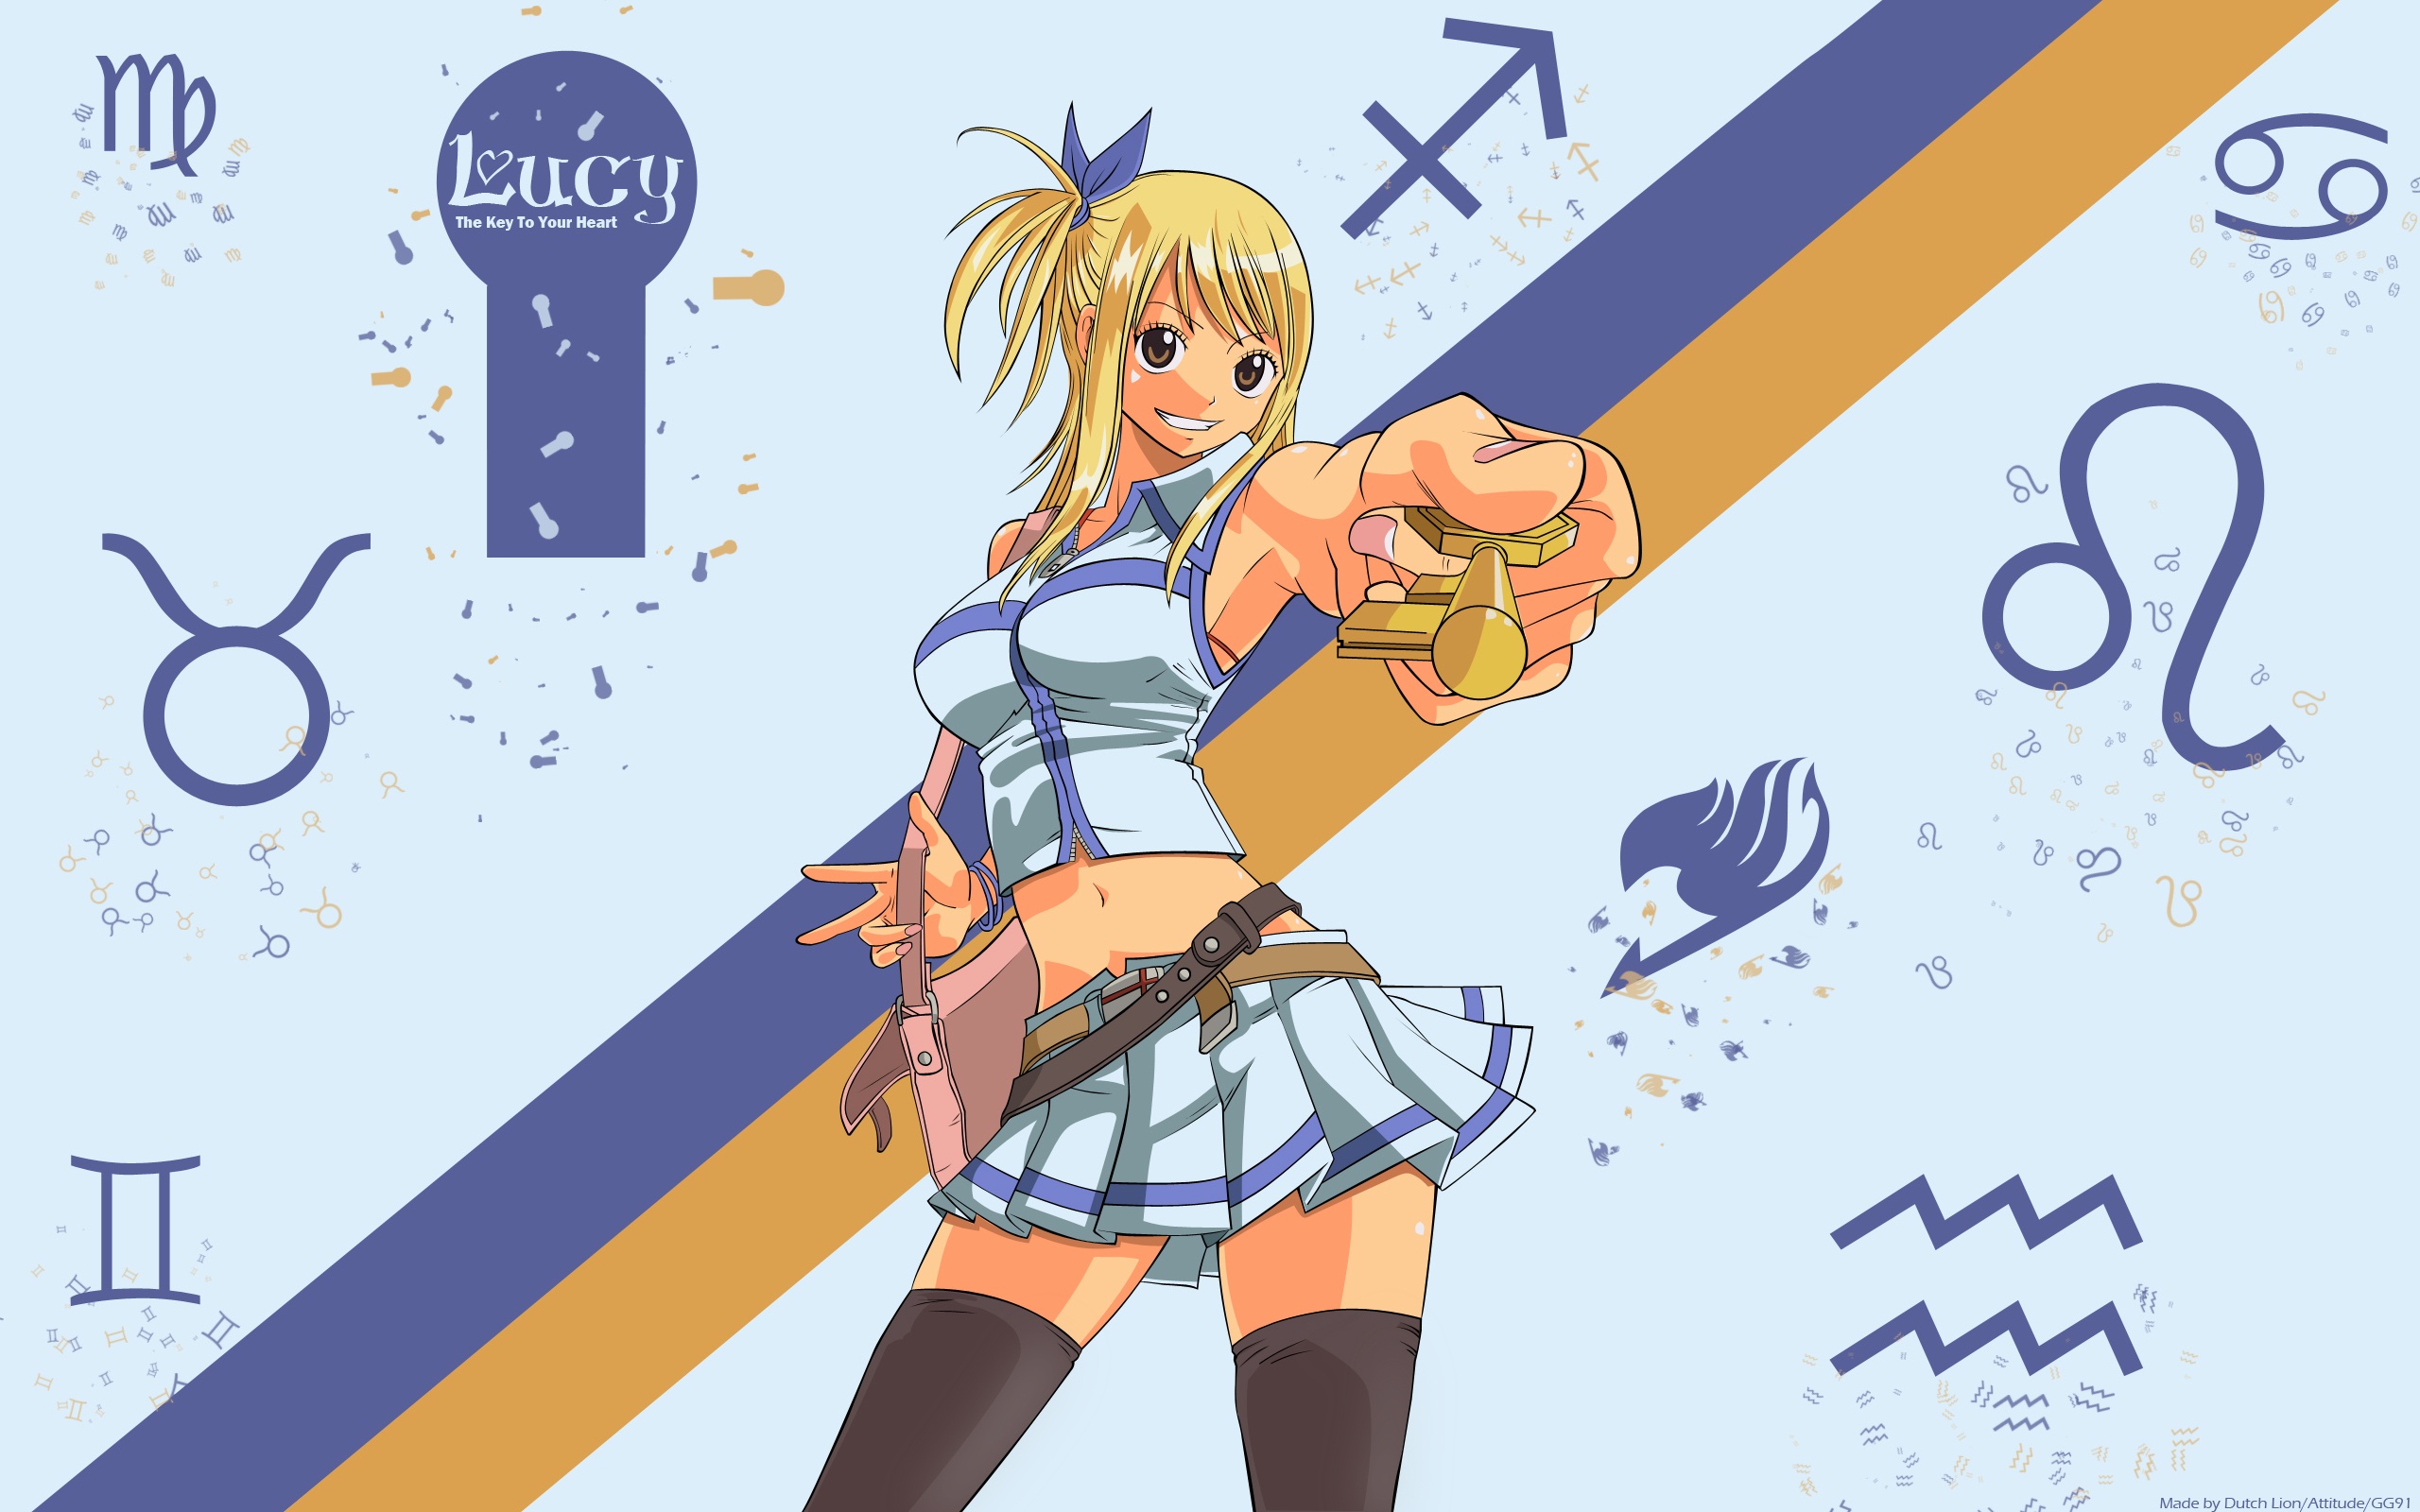 Fairy Tail character Lucy Heartfilia in Anime desktop wallpaper.